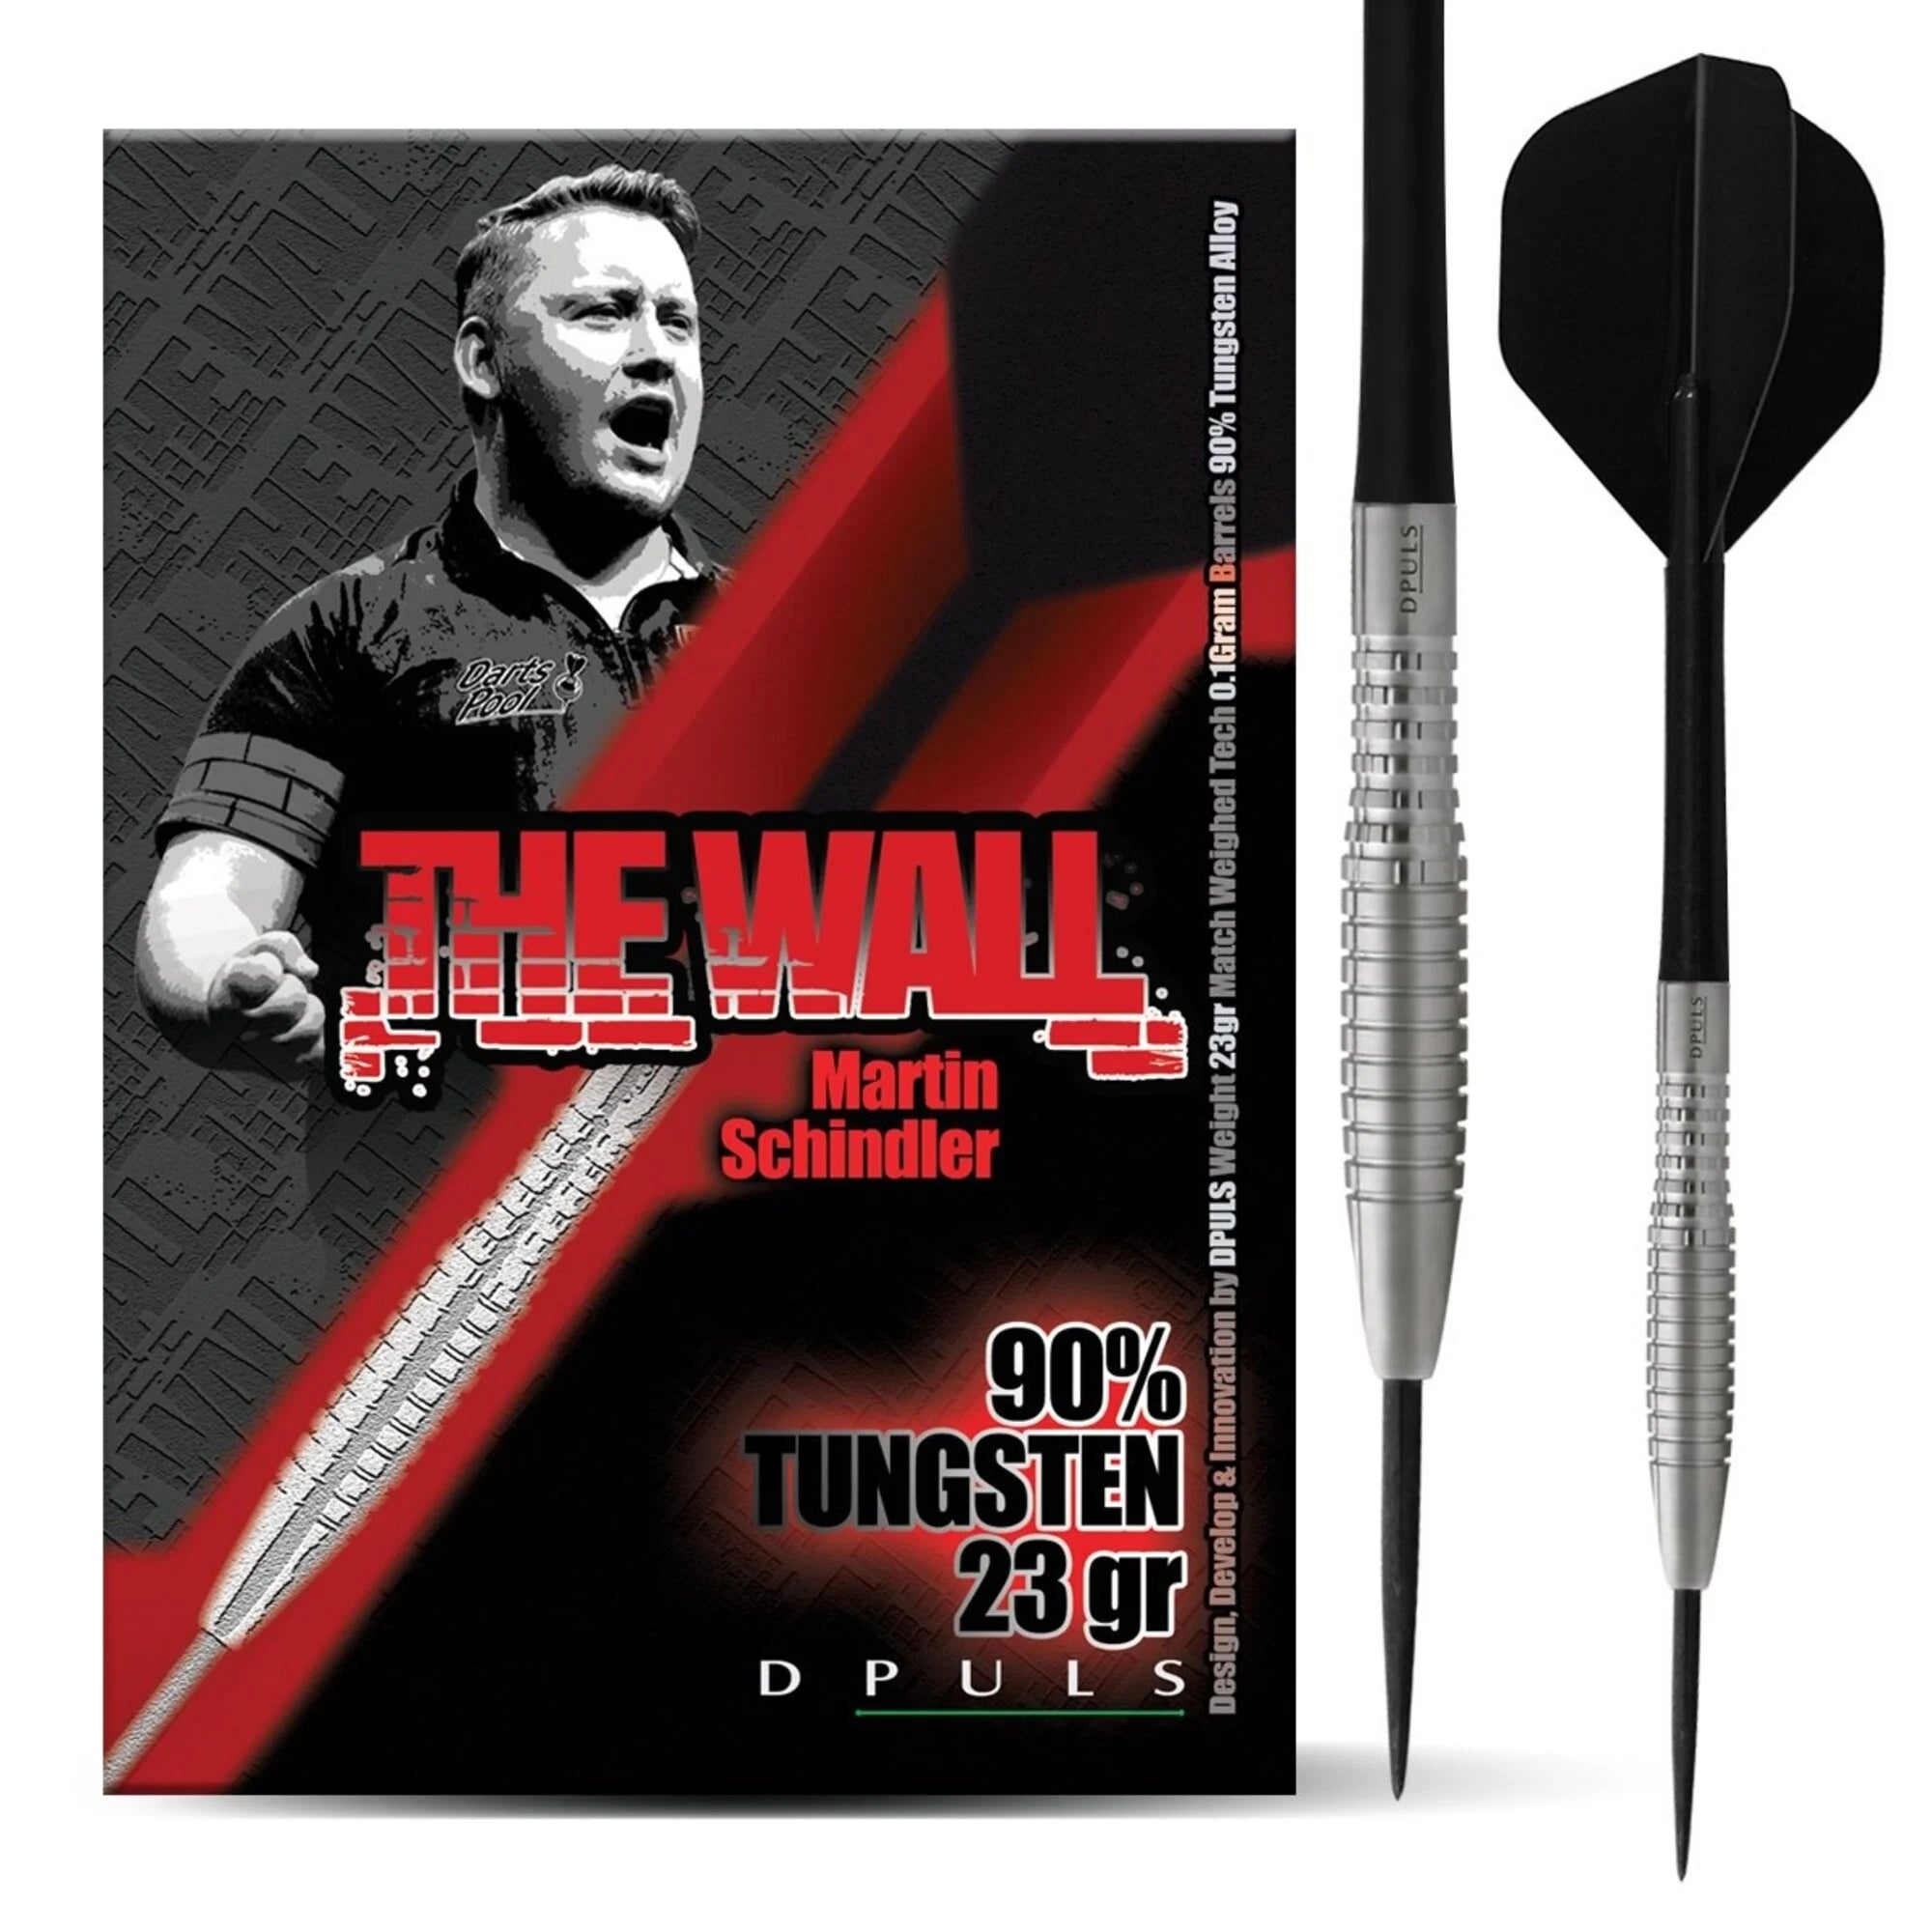 DPULS Martin "The Wall" Schindler Steel Darts 23g/90%